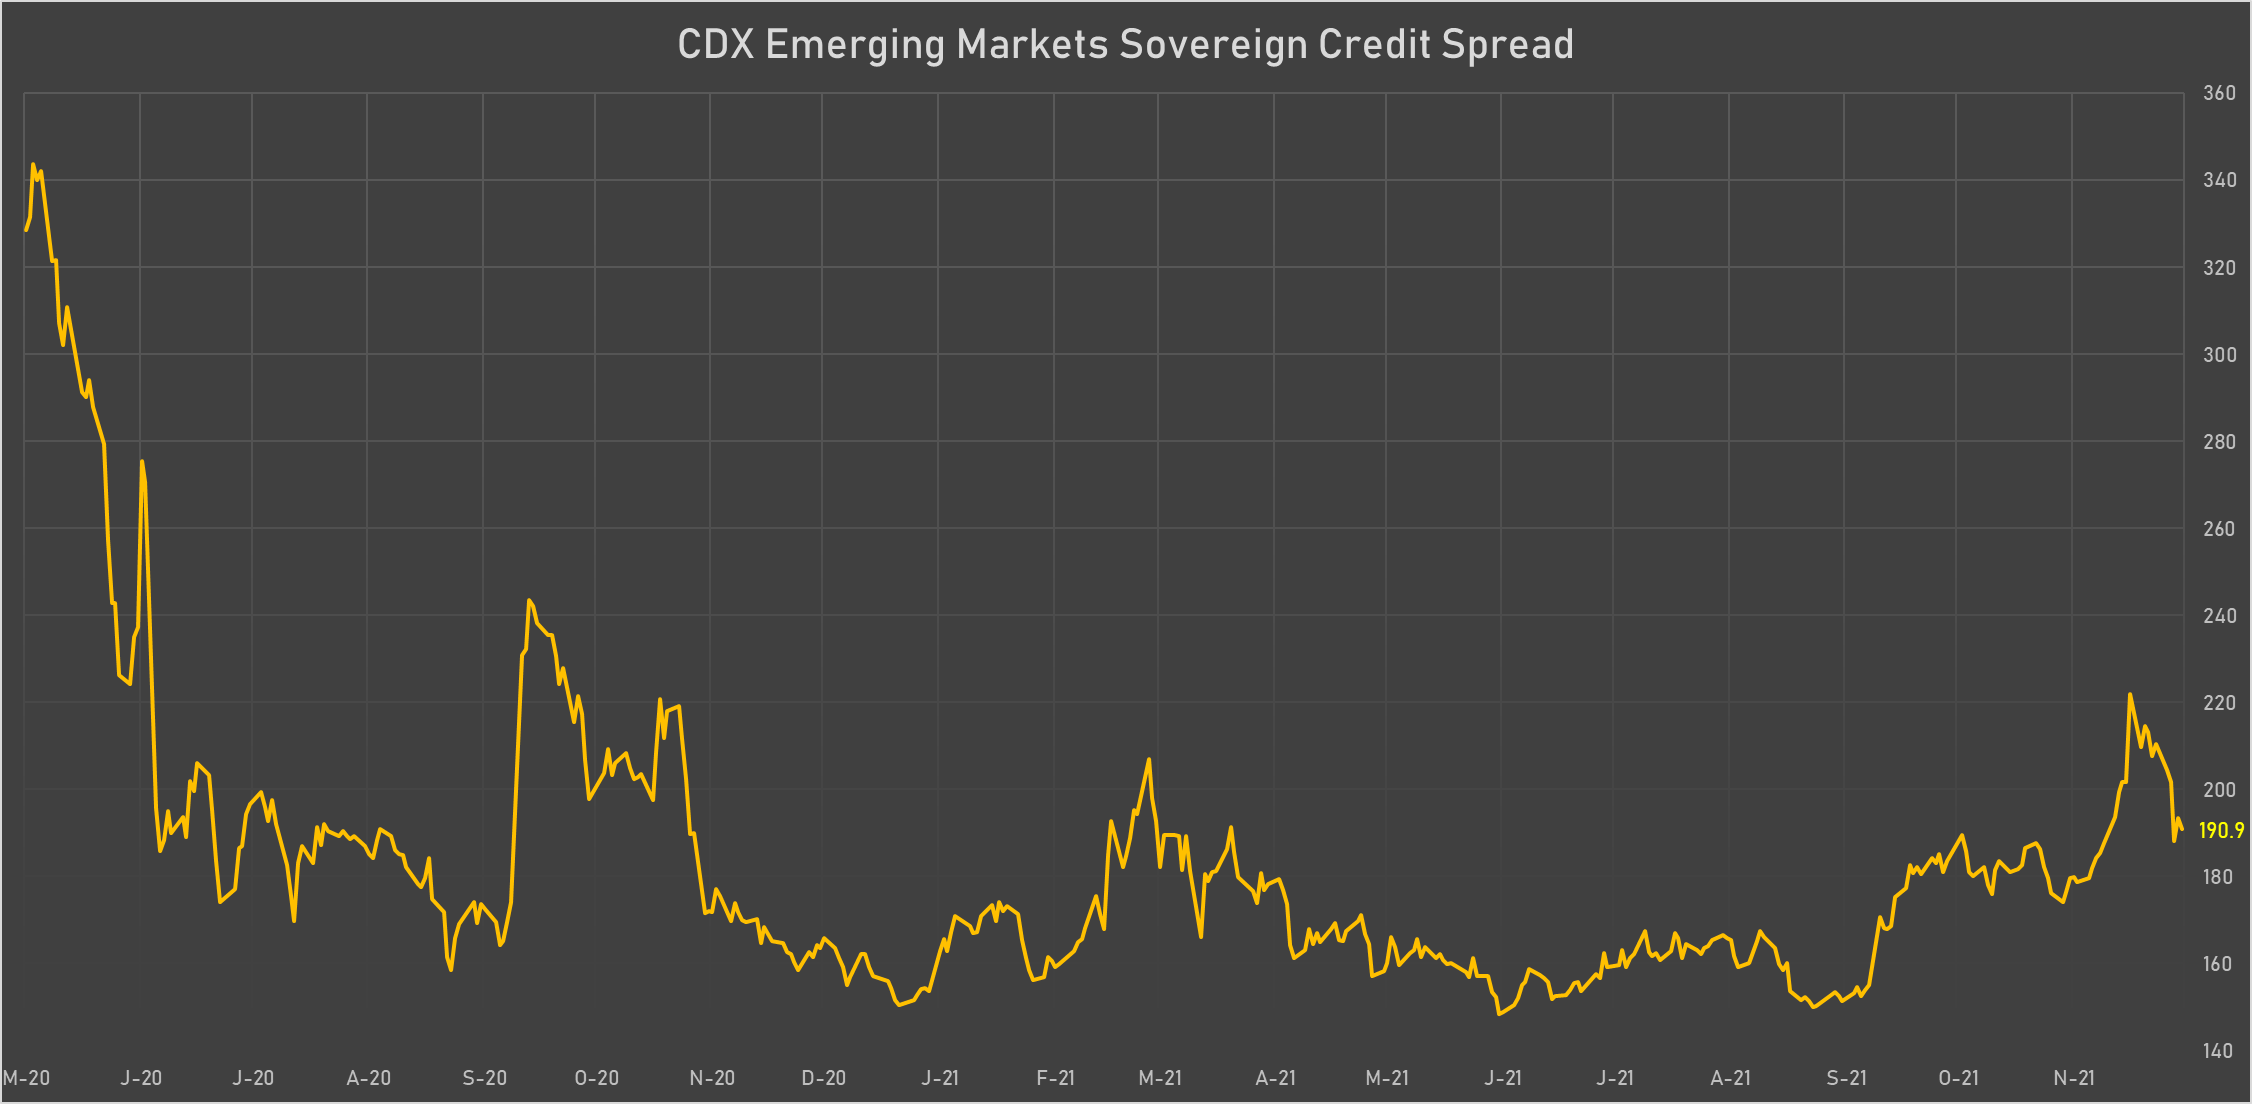 CDX EM SOvereign Credit Spread | Sources: phipost.com, Refinitiv data